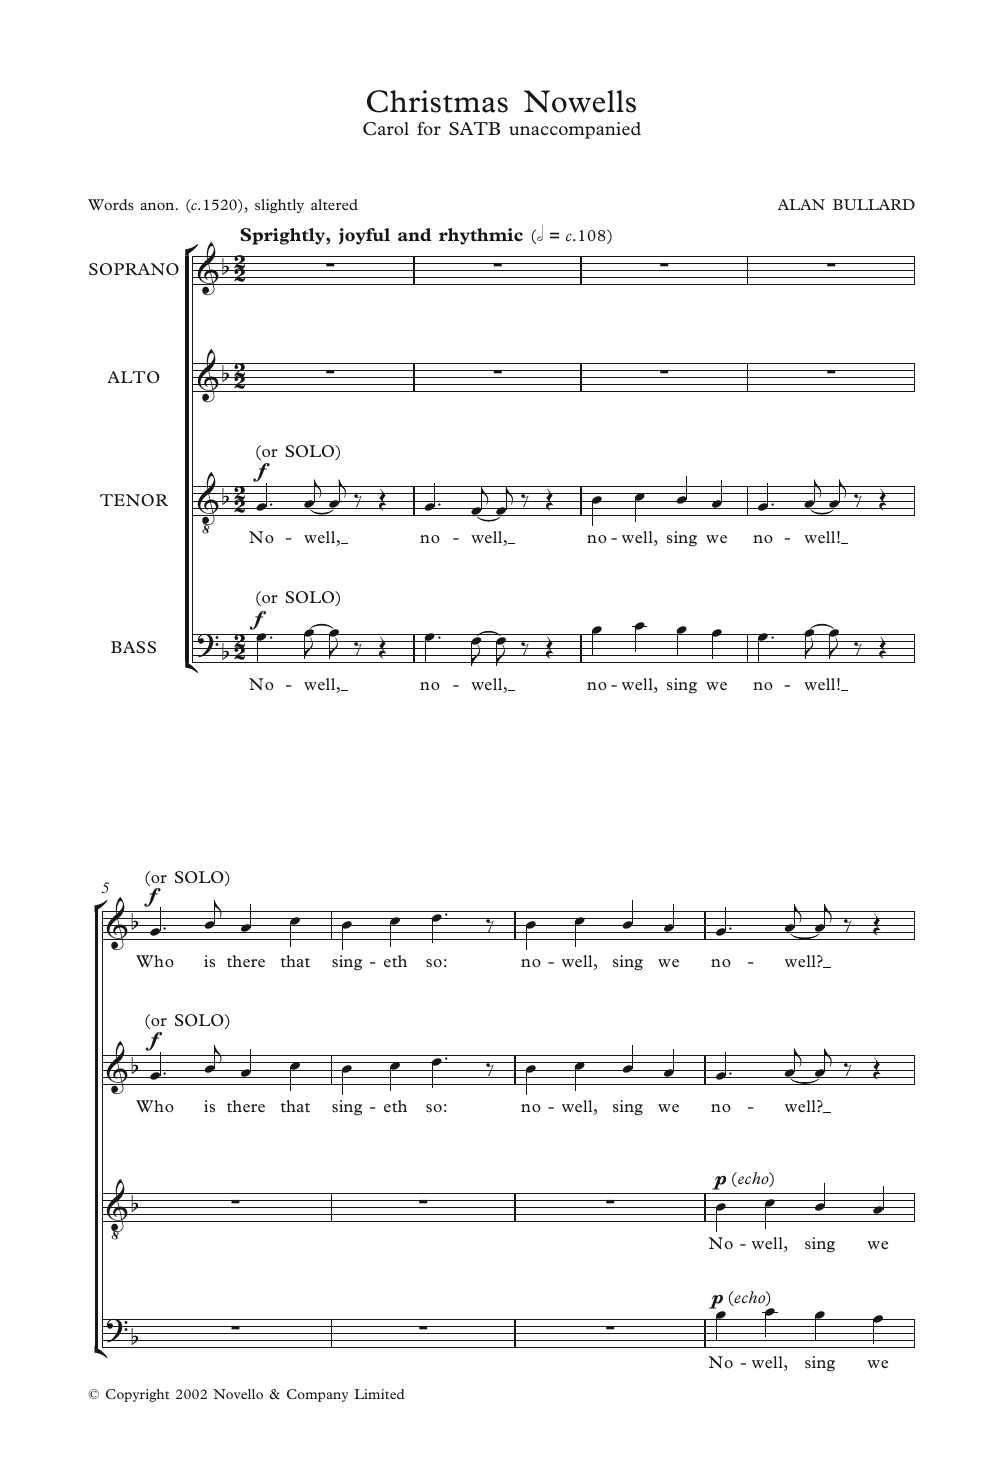 Alan Bullard Christmas Nowells Sheet Music Notes & Chords for SATB Choir - Download or Print PDF